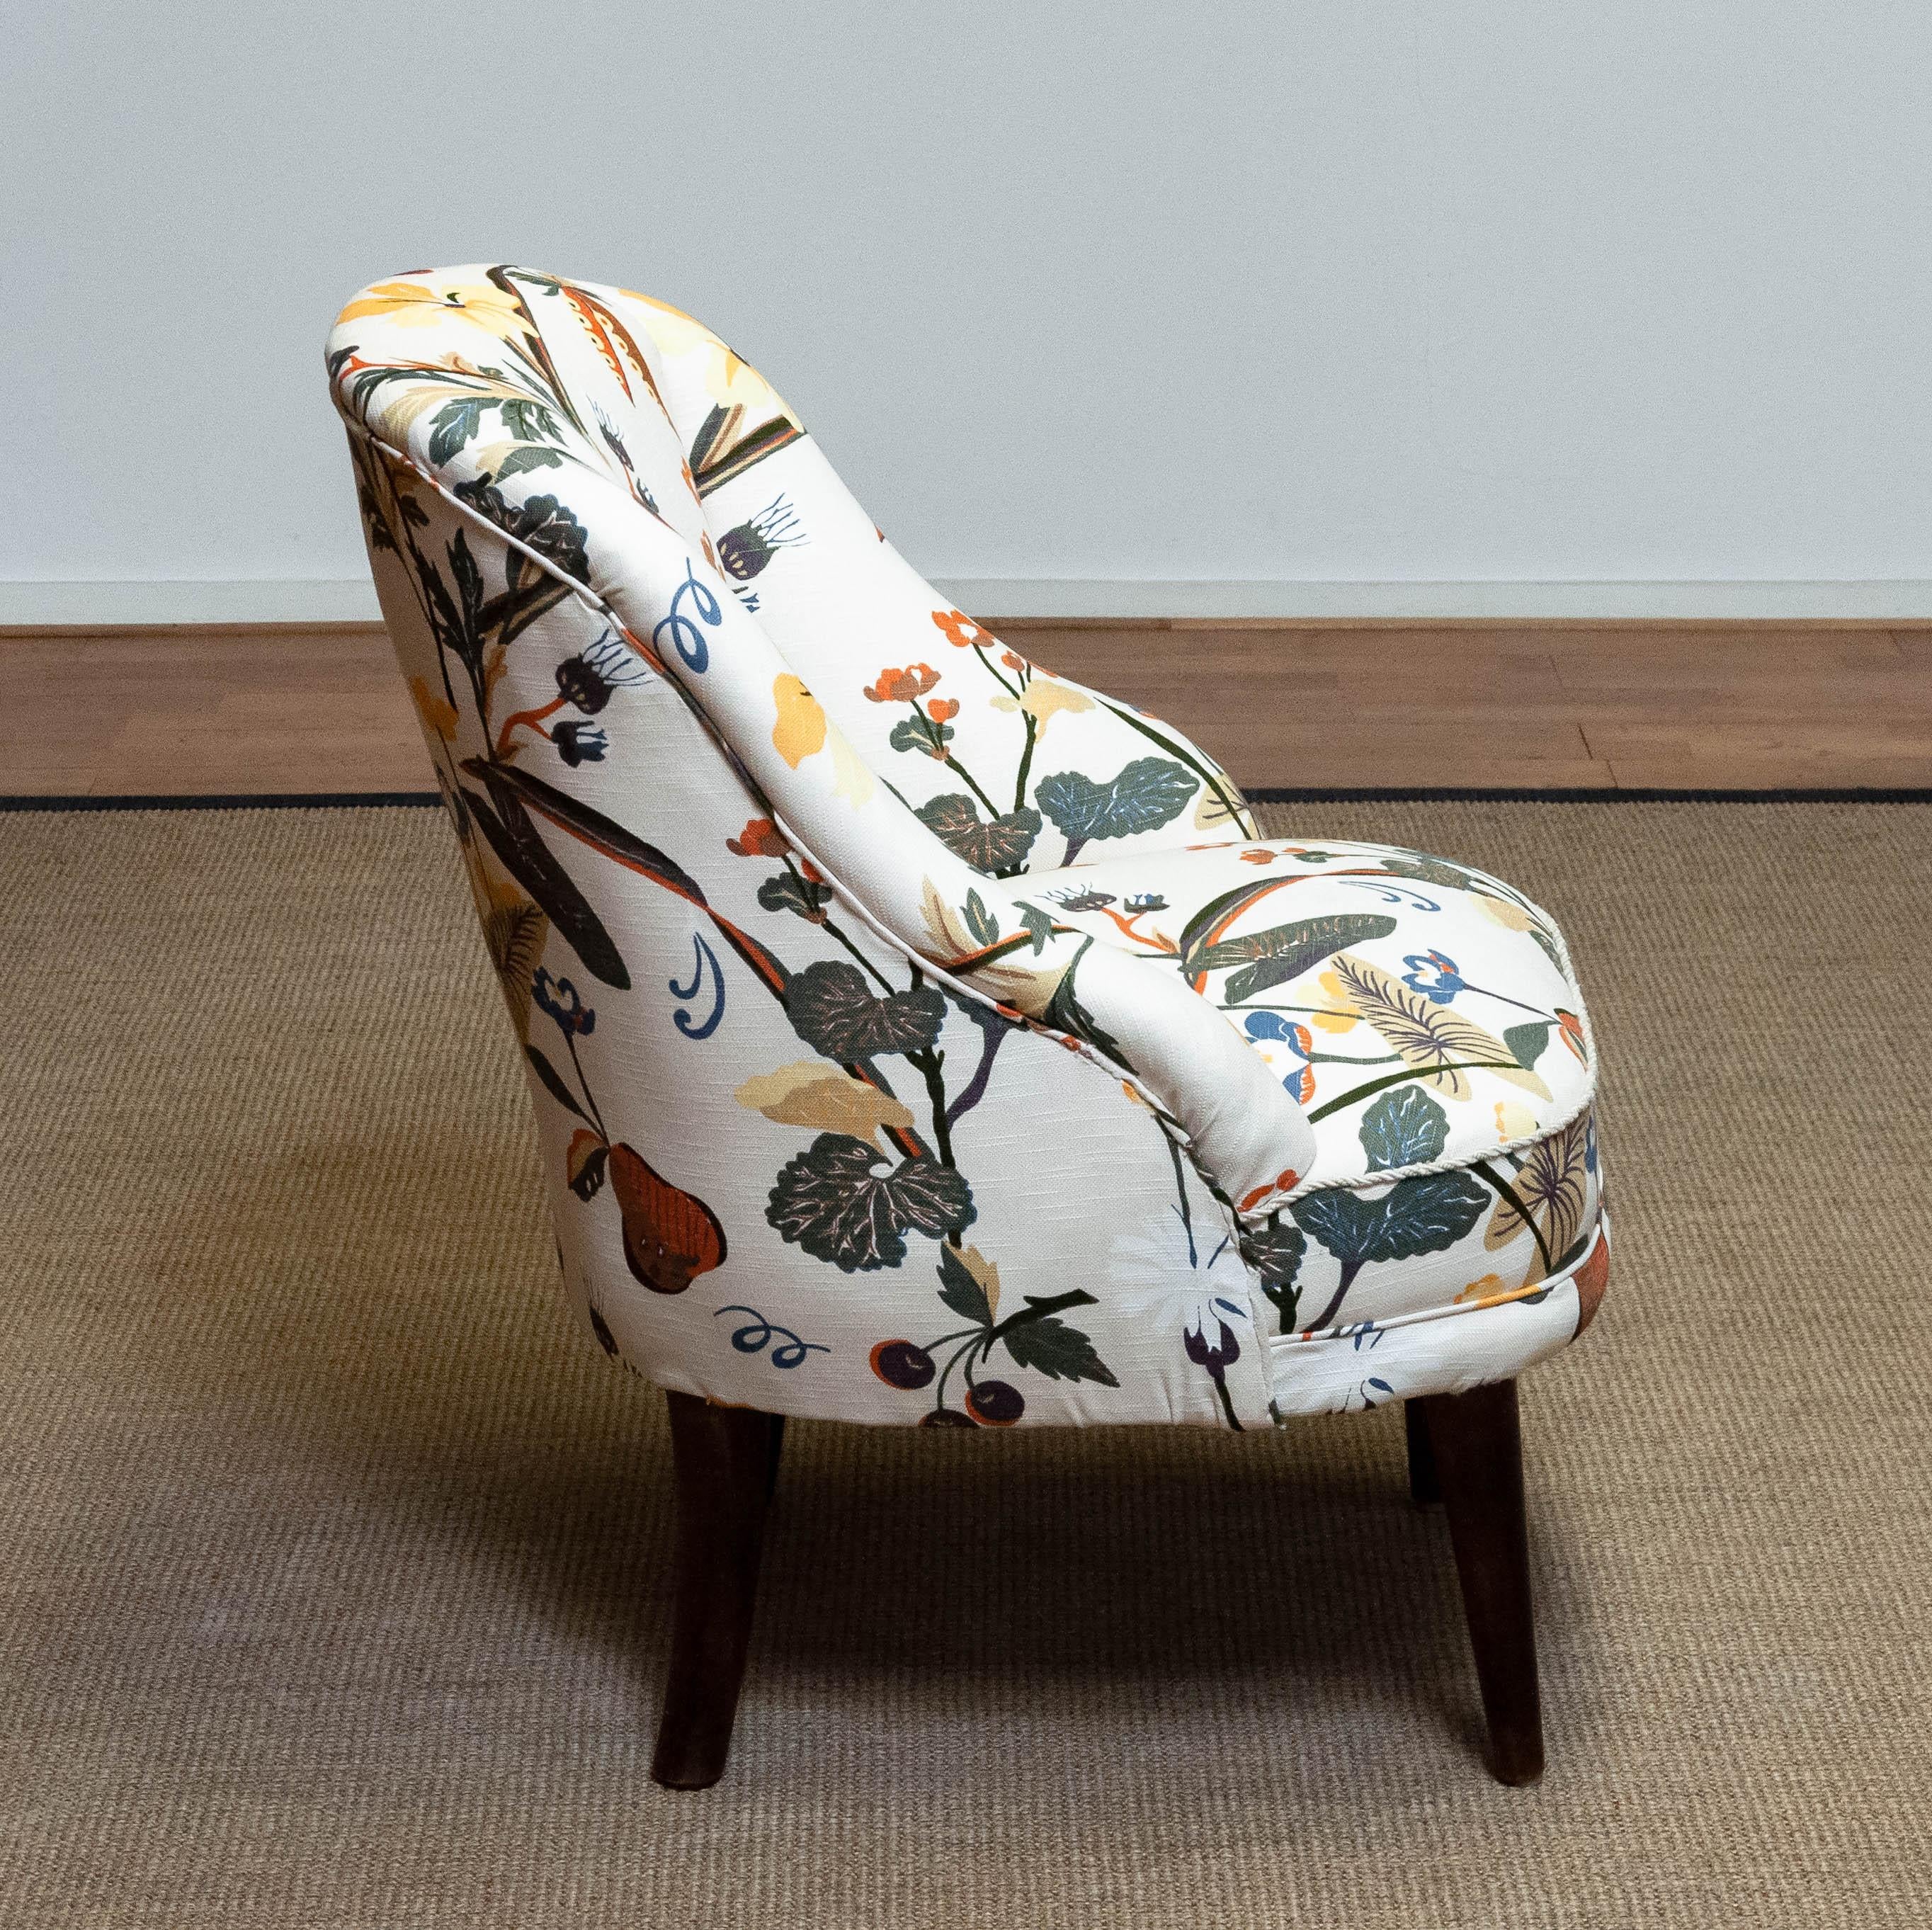 '40s Floral Printed Linen, J. Frank Style, New Upholstered Danish Slipper Chair For Sale 3